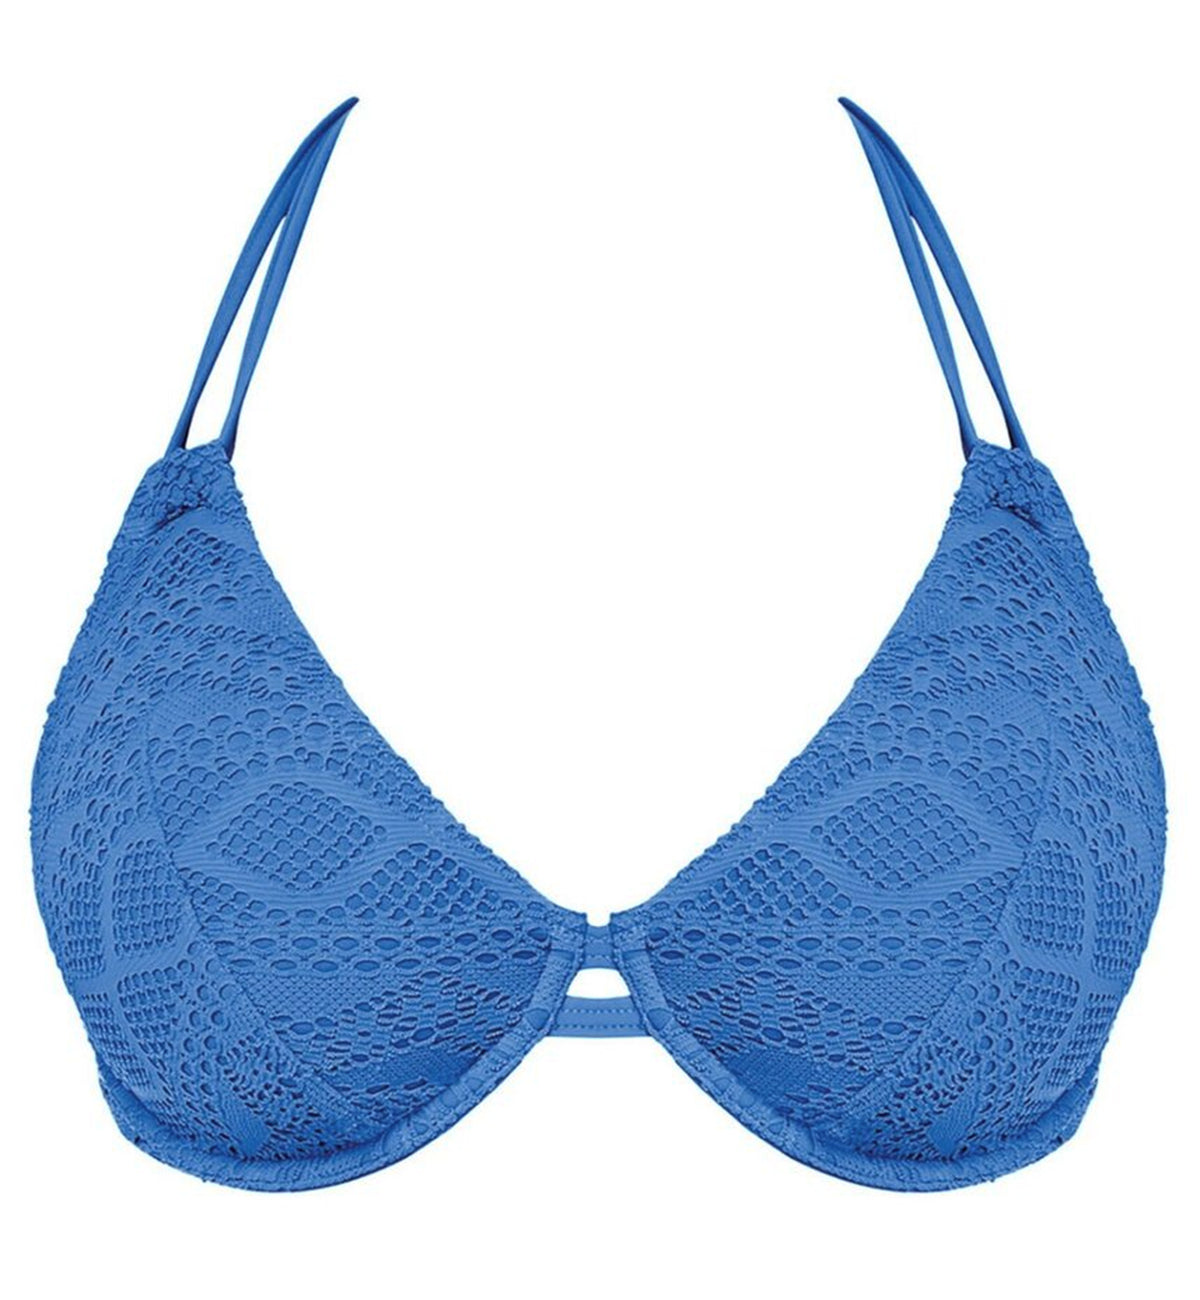 Freya Sundance Bandless Underwire Halter Bikini Top (3971),30F,Blue Moon - Blue Moon,30F